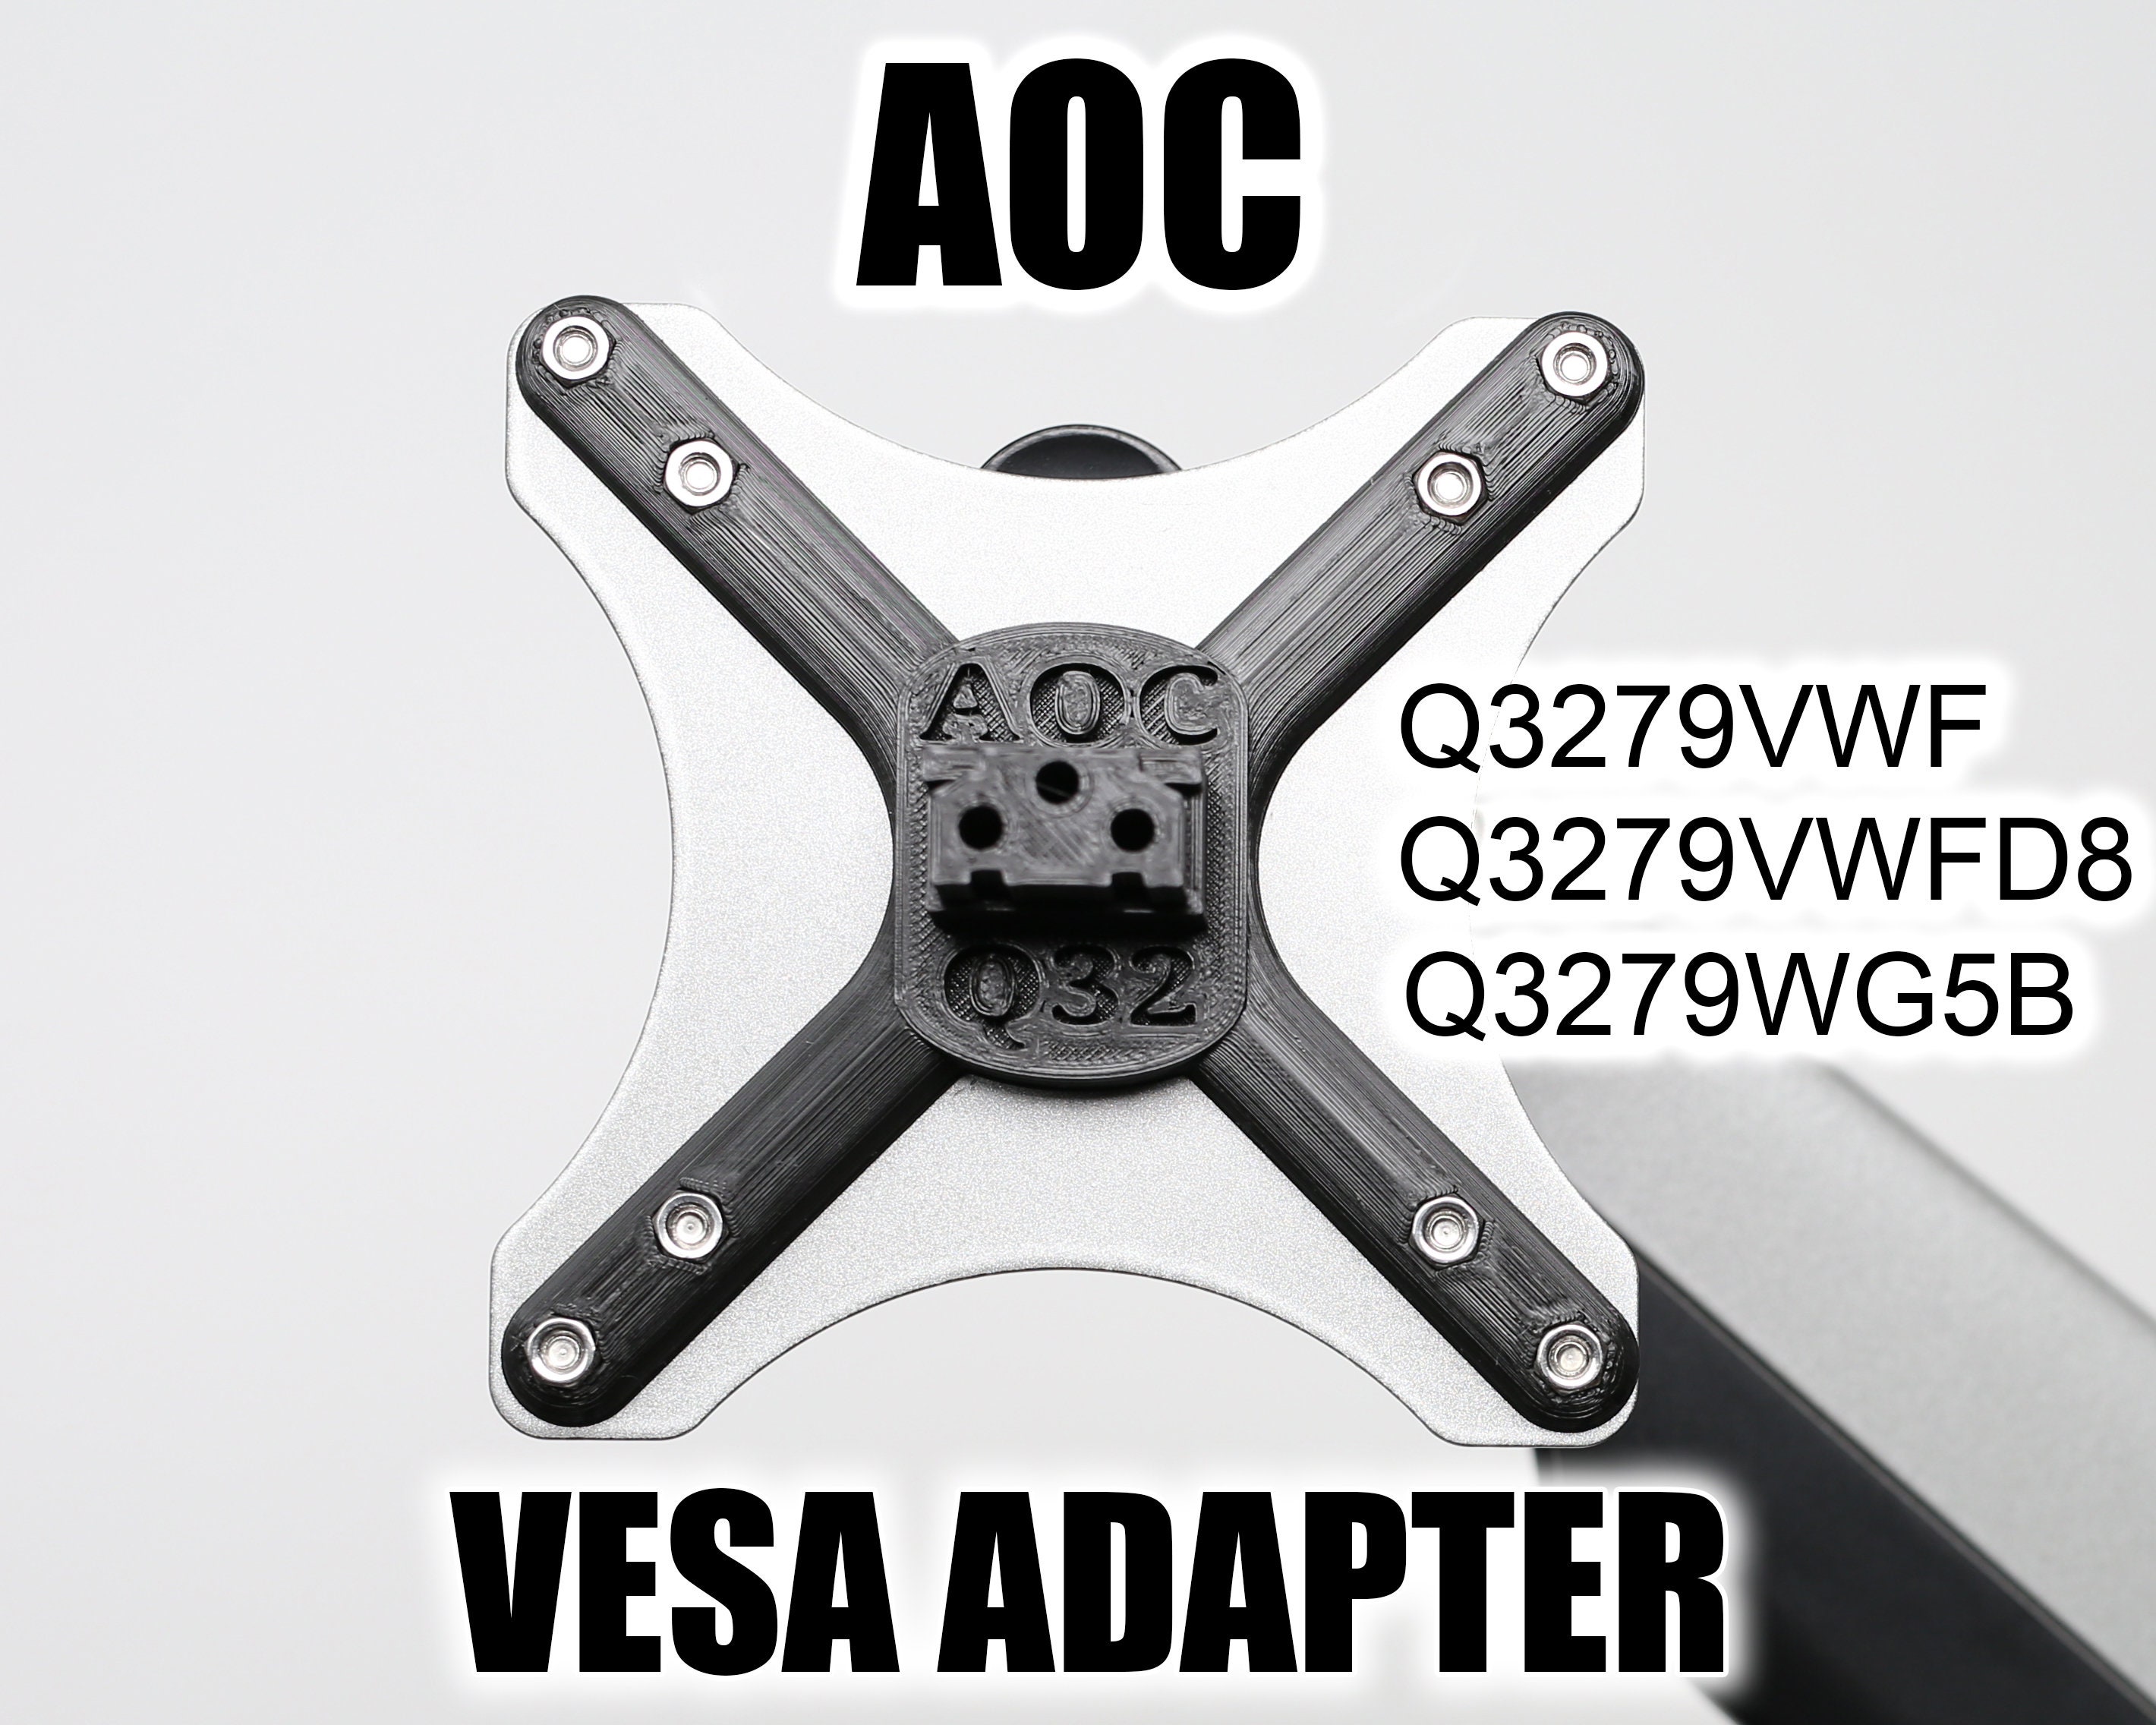 Support Simple Écran PC - VESA 32'/49' - Supports d'écran